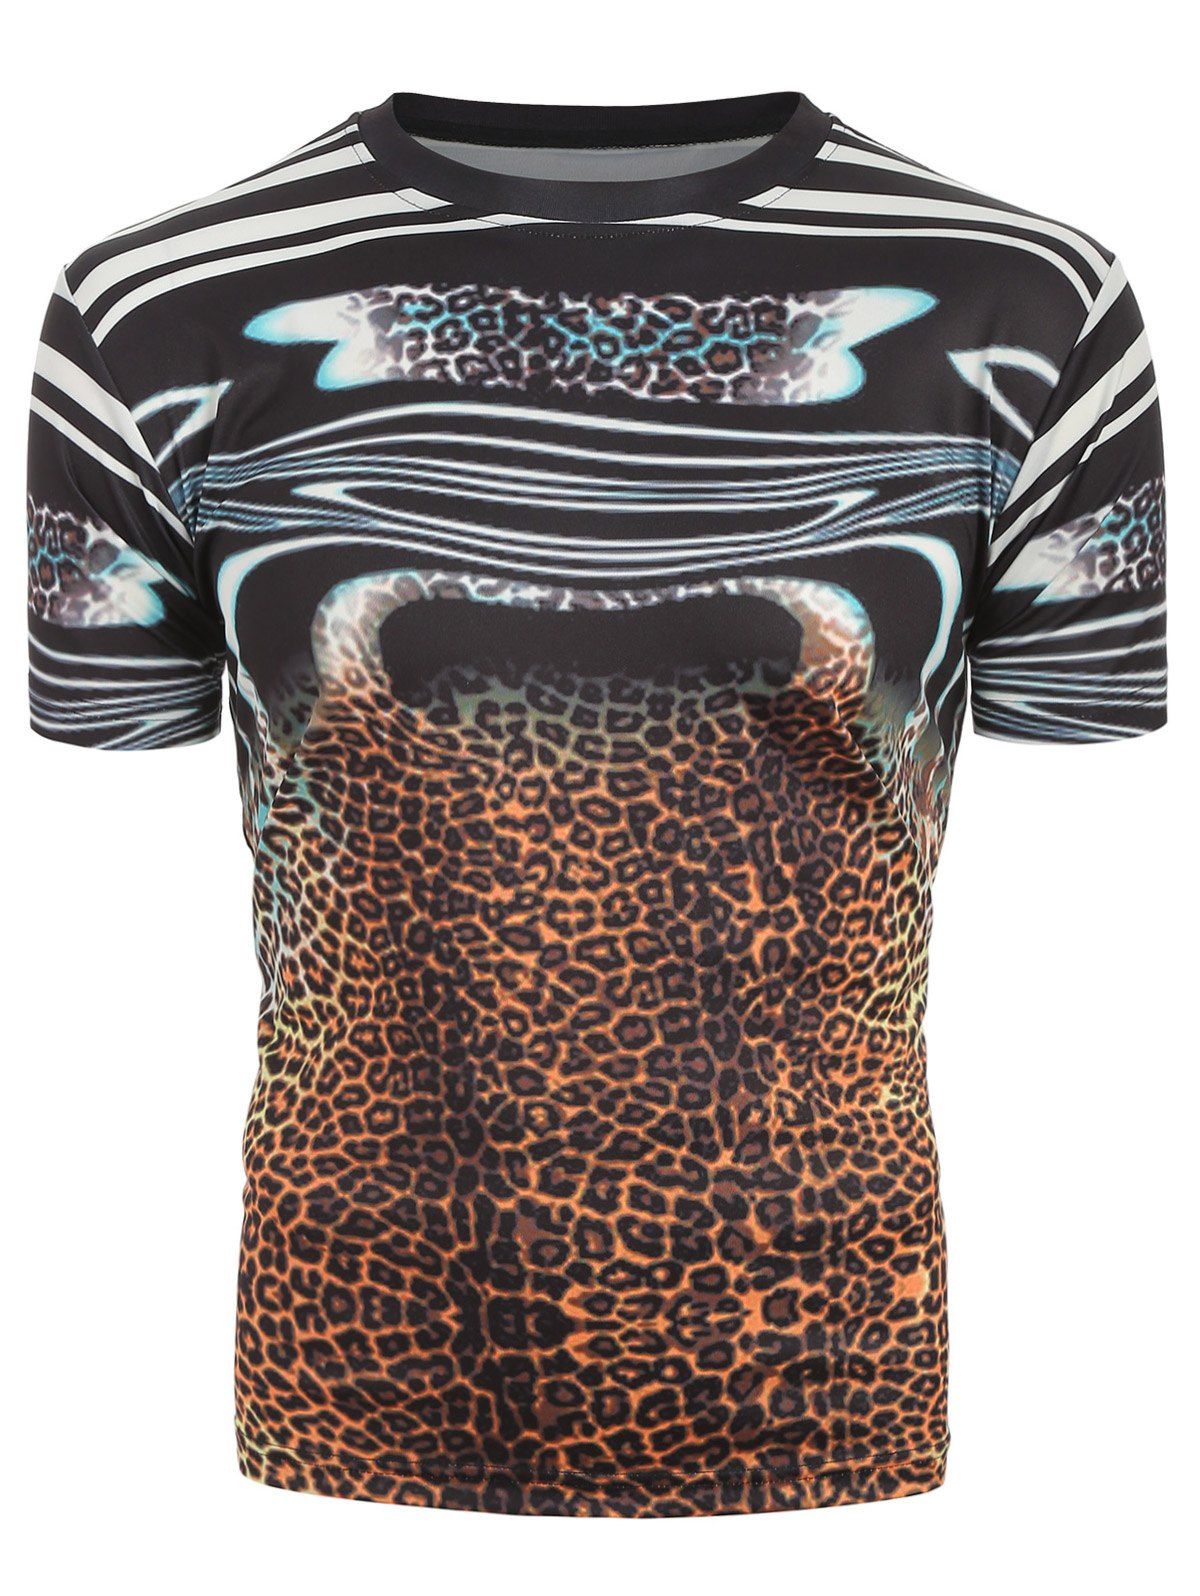 Chic Leopard Print Short Sleeves Tee  